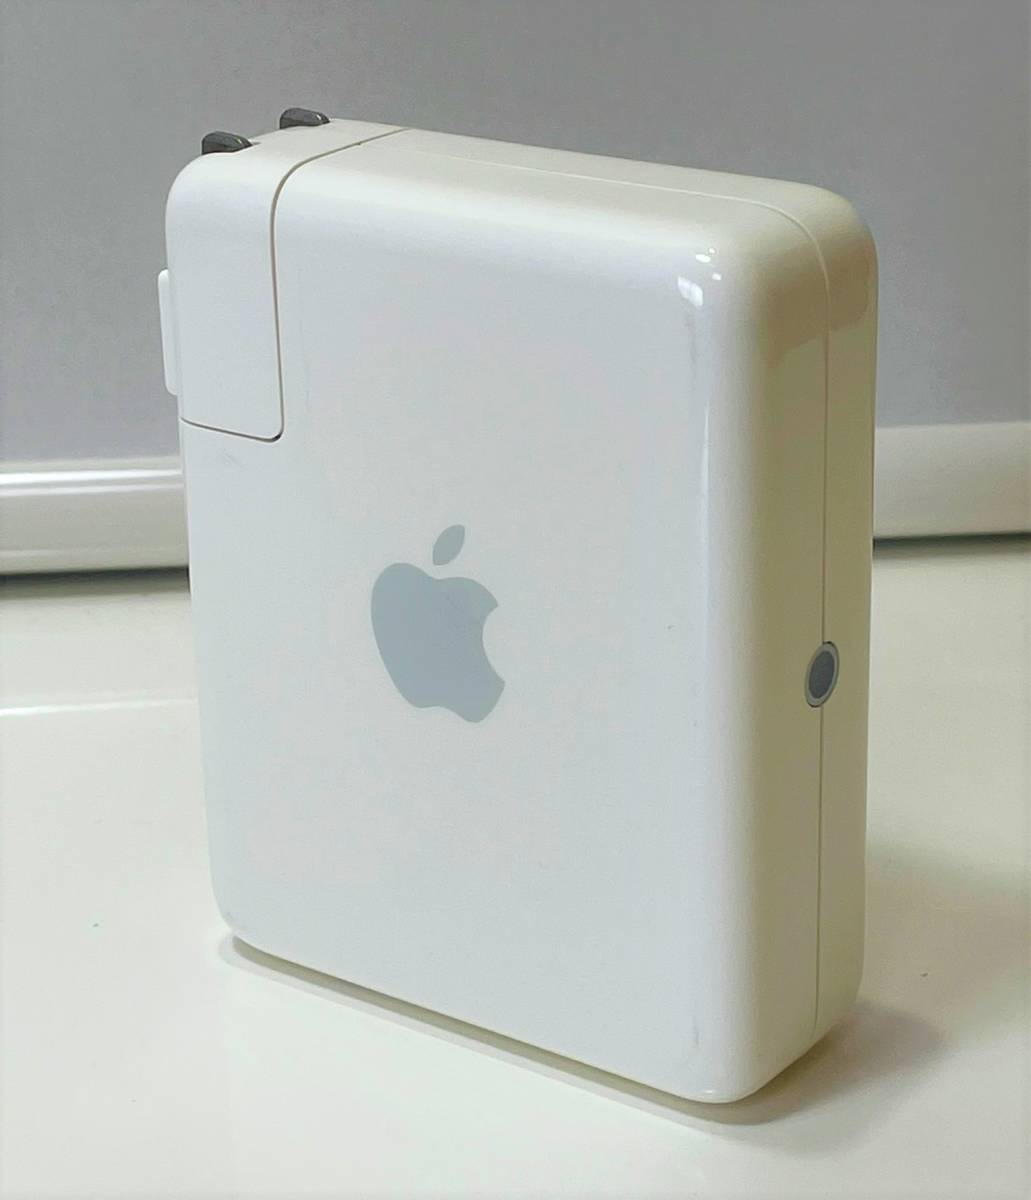 Apple アップル 純正 AirMac Express エアマック エクスプレス MB321 J/A A1264 美品 ■Wi-Fi / 無線LAN 全国送料無料!